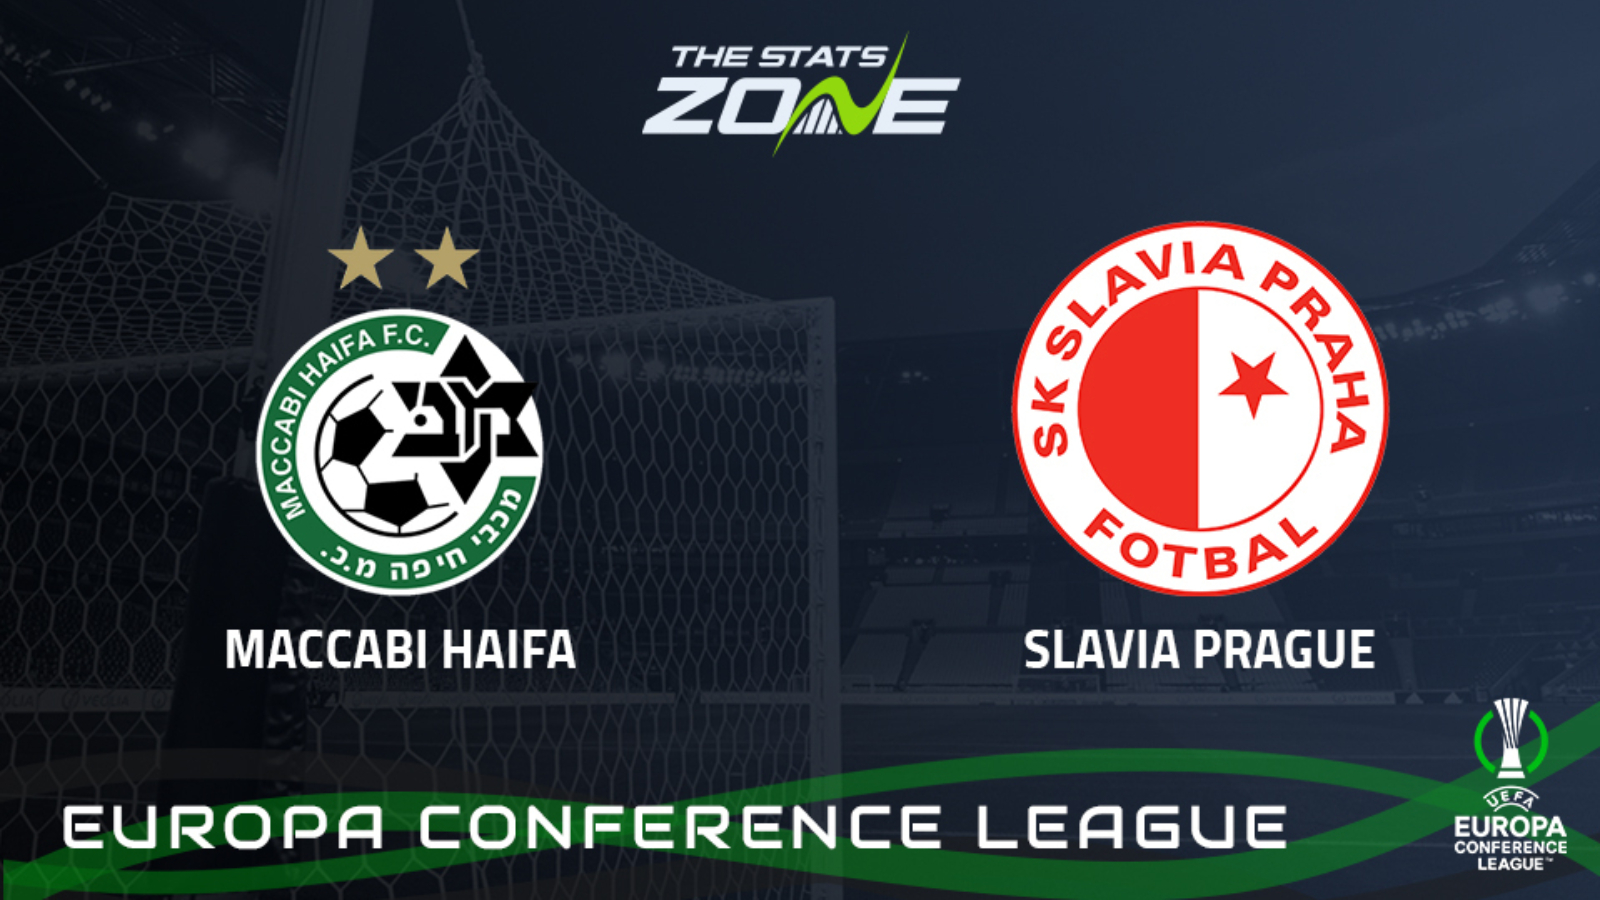 Maccabi Haifa vs Slavia Prague prediction, preview, team news and